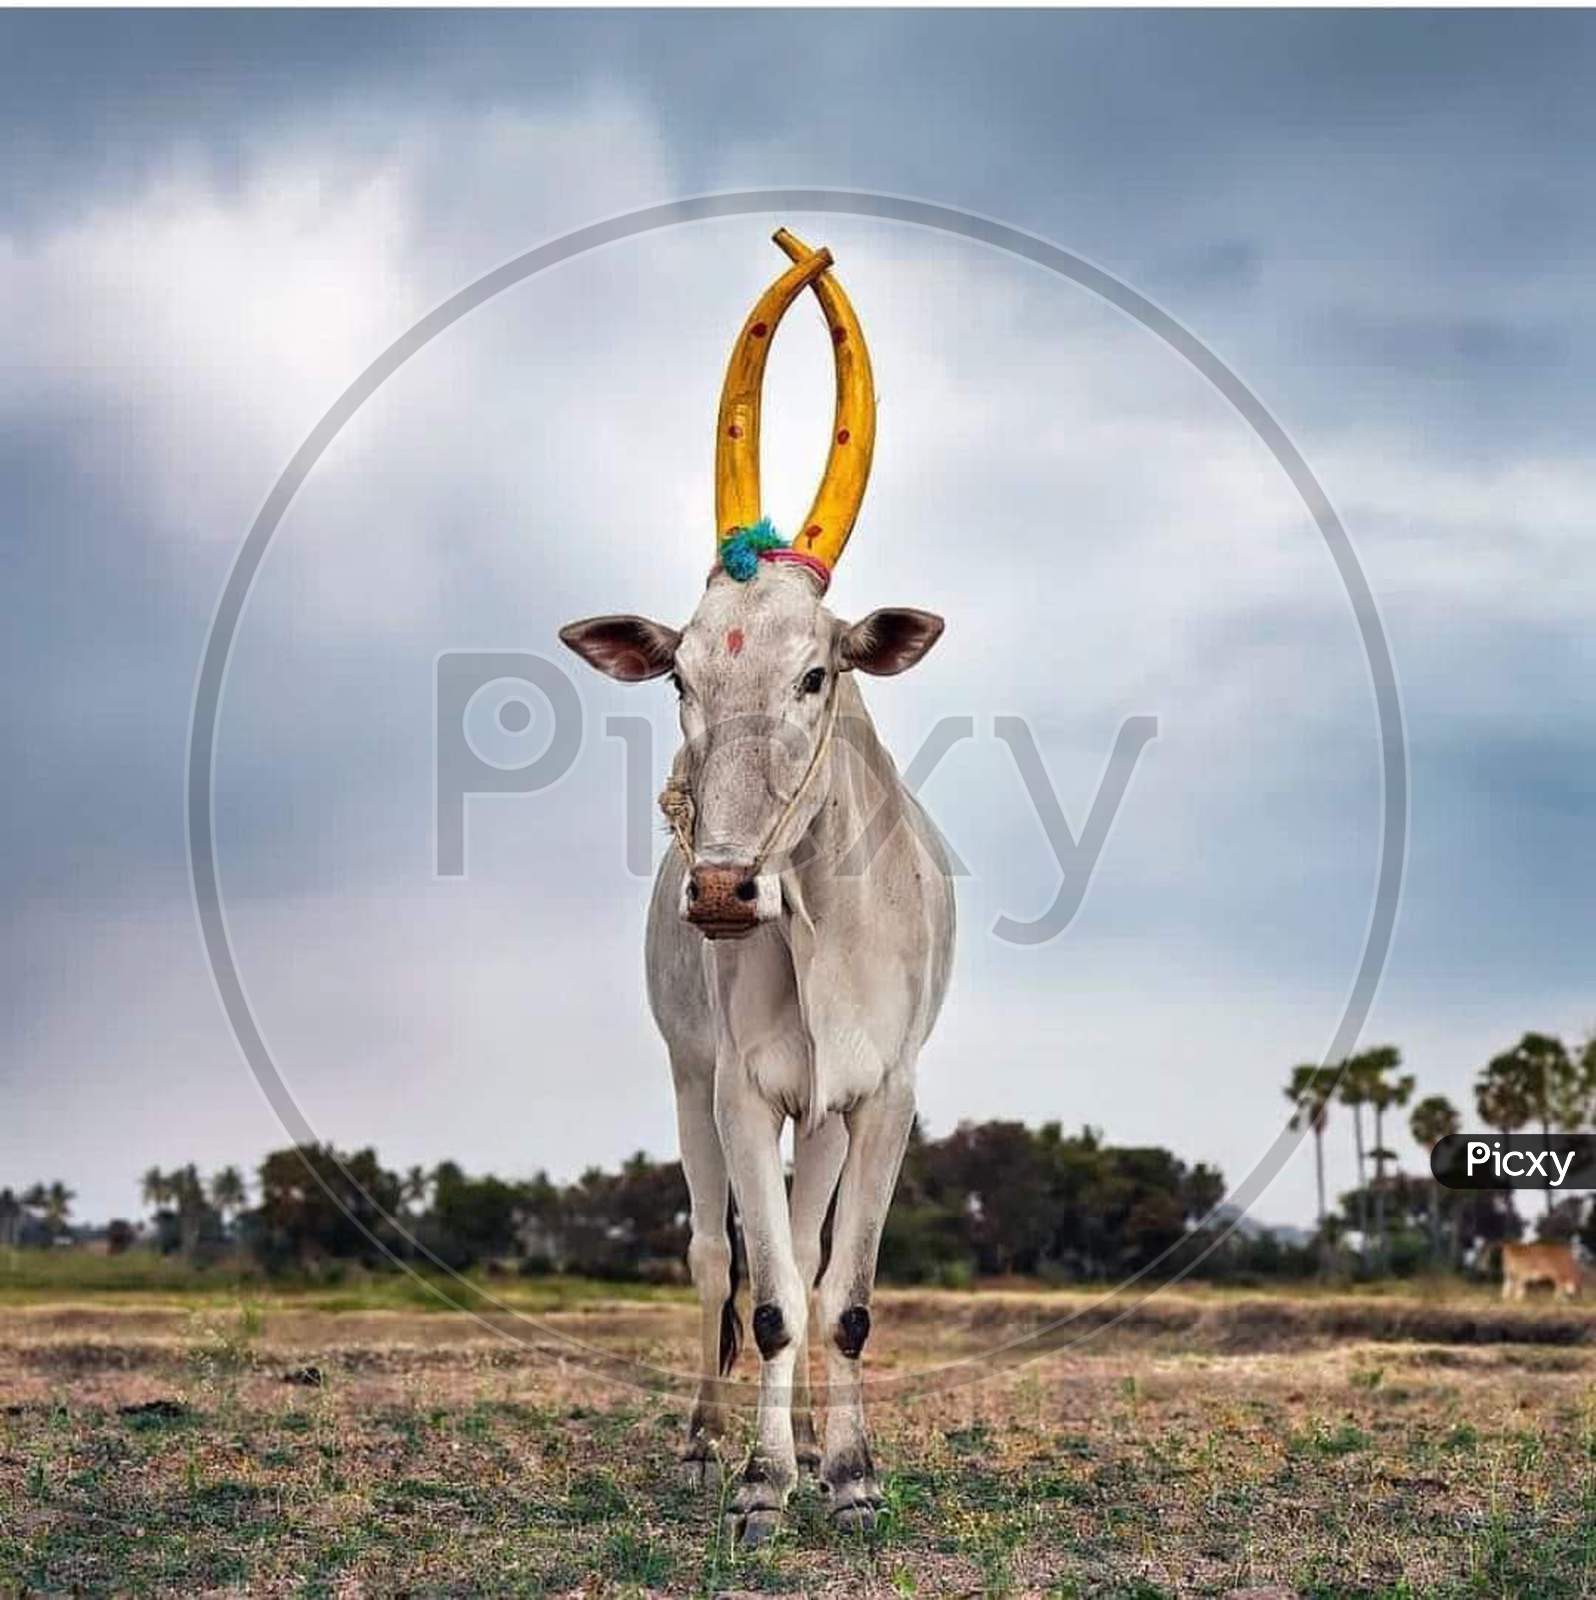 A cow in a village